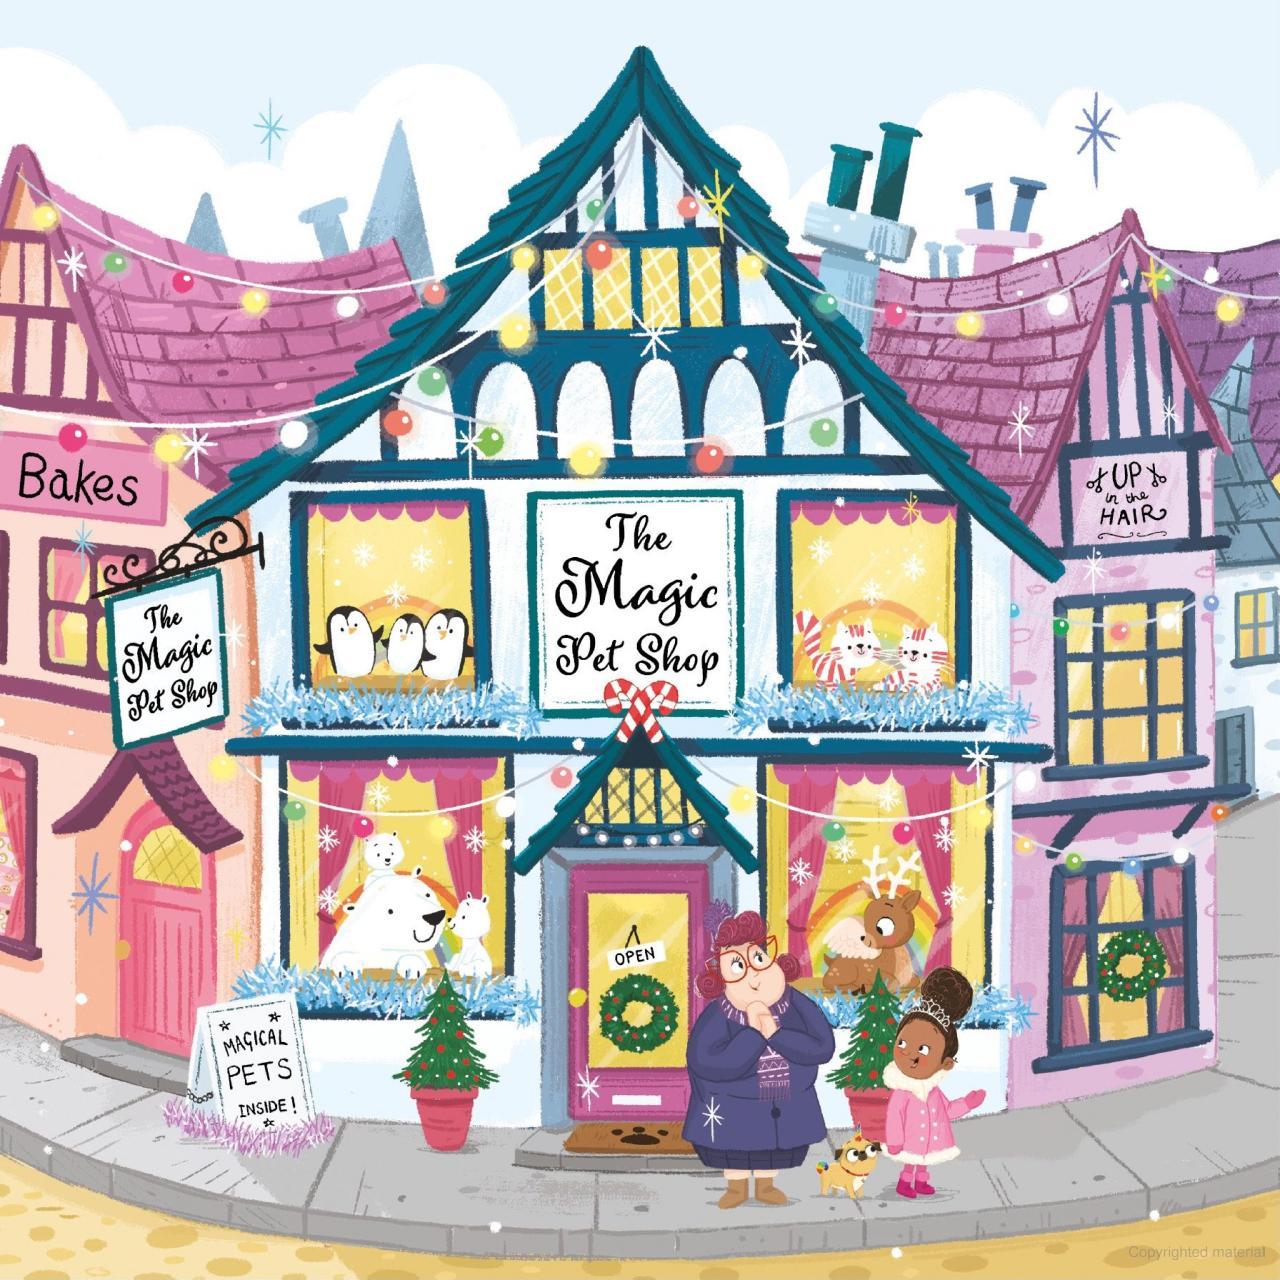 The Magic Pet Shop: Pugicorn And The Christmas Wish